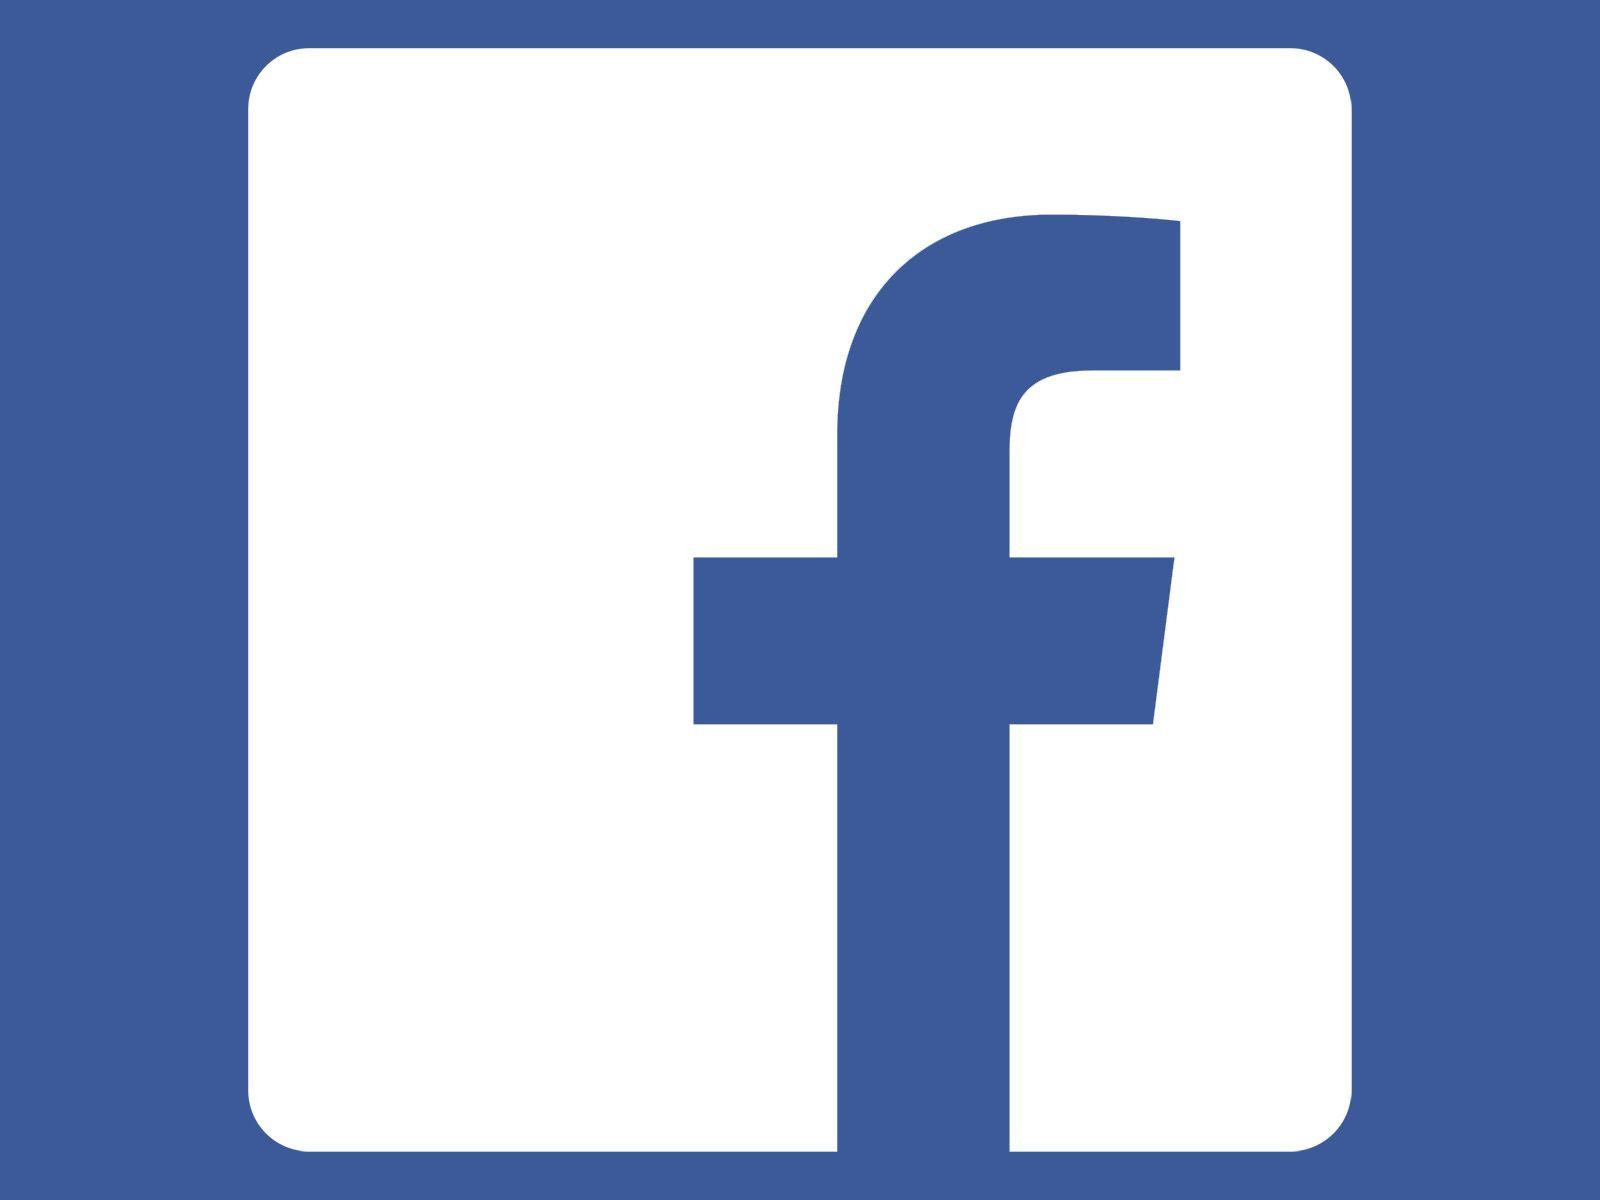 Facebok Logo - Facebook Logo, FB symbol meaning, History and Evolution